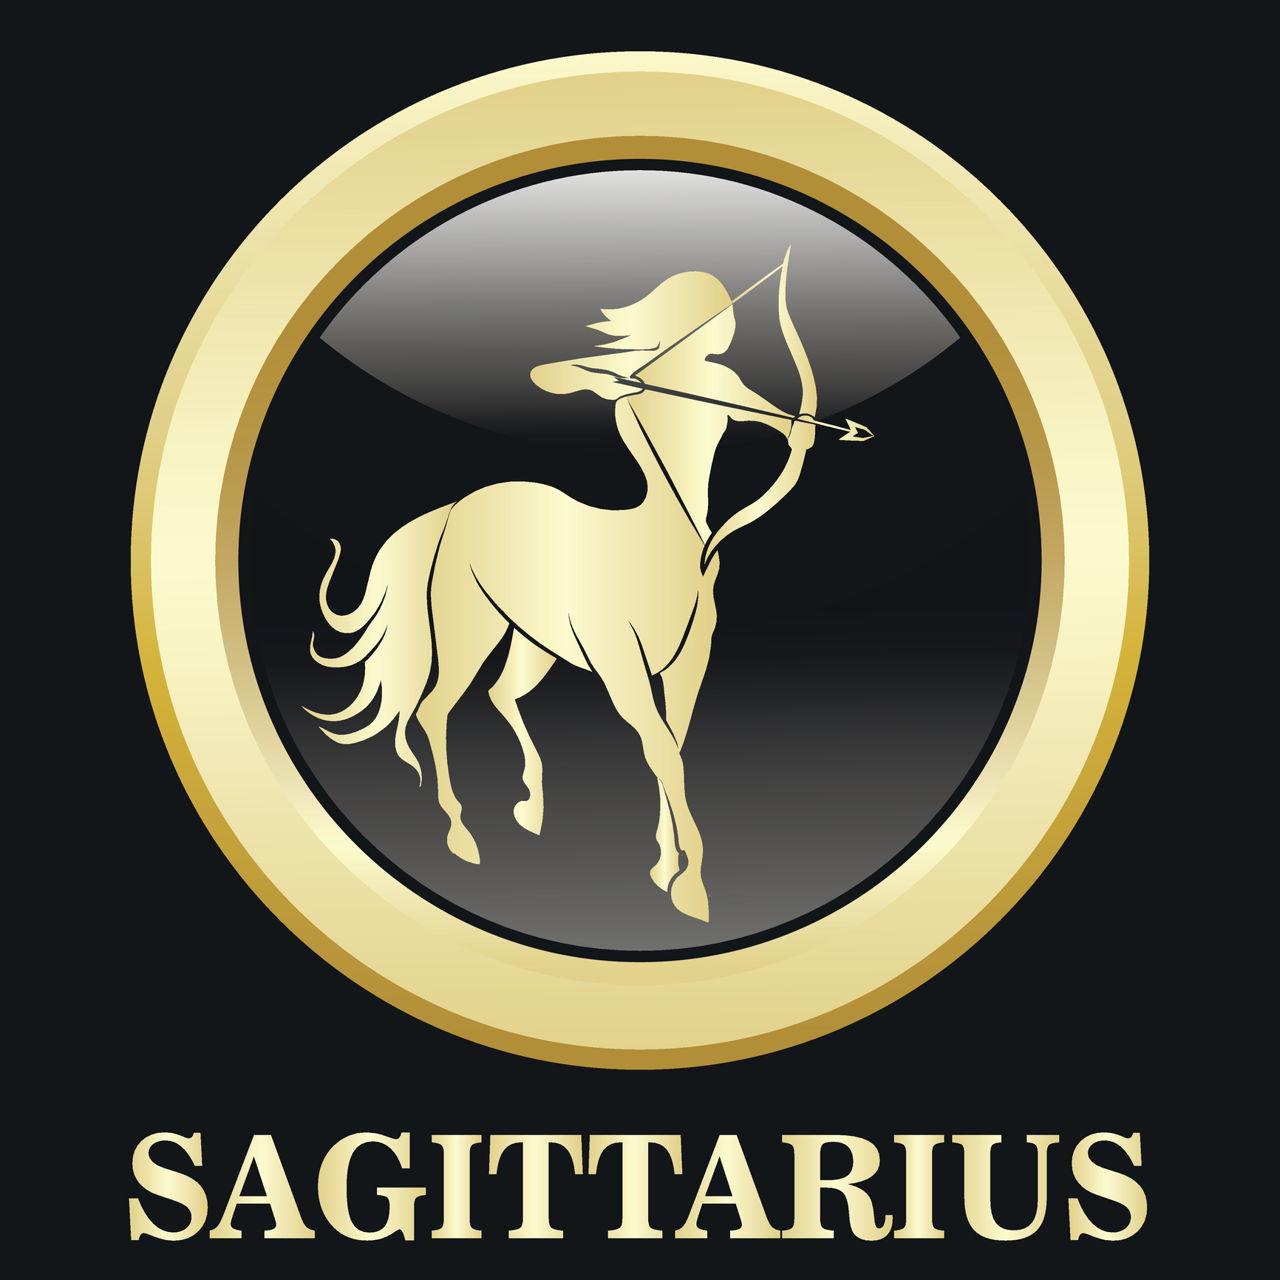 Signs a sagittarius man loves you